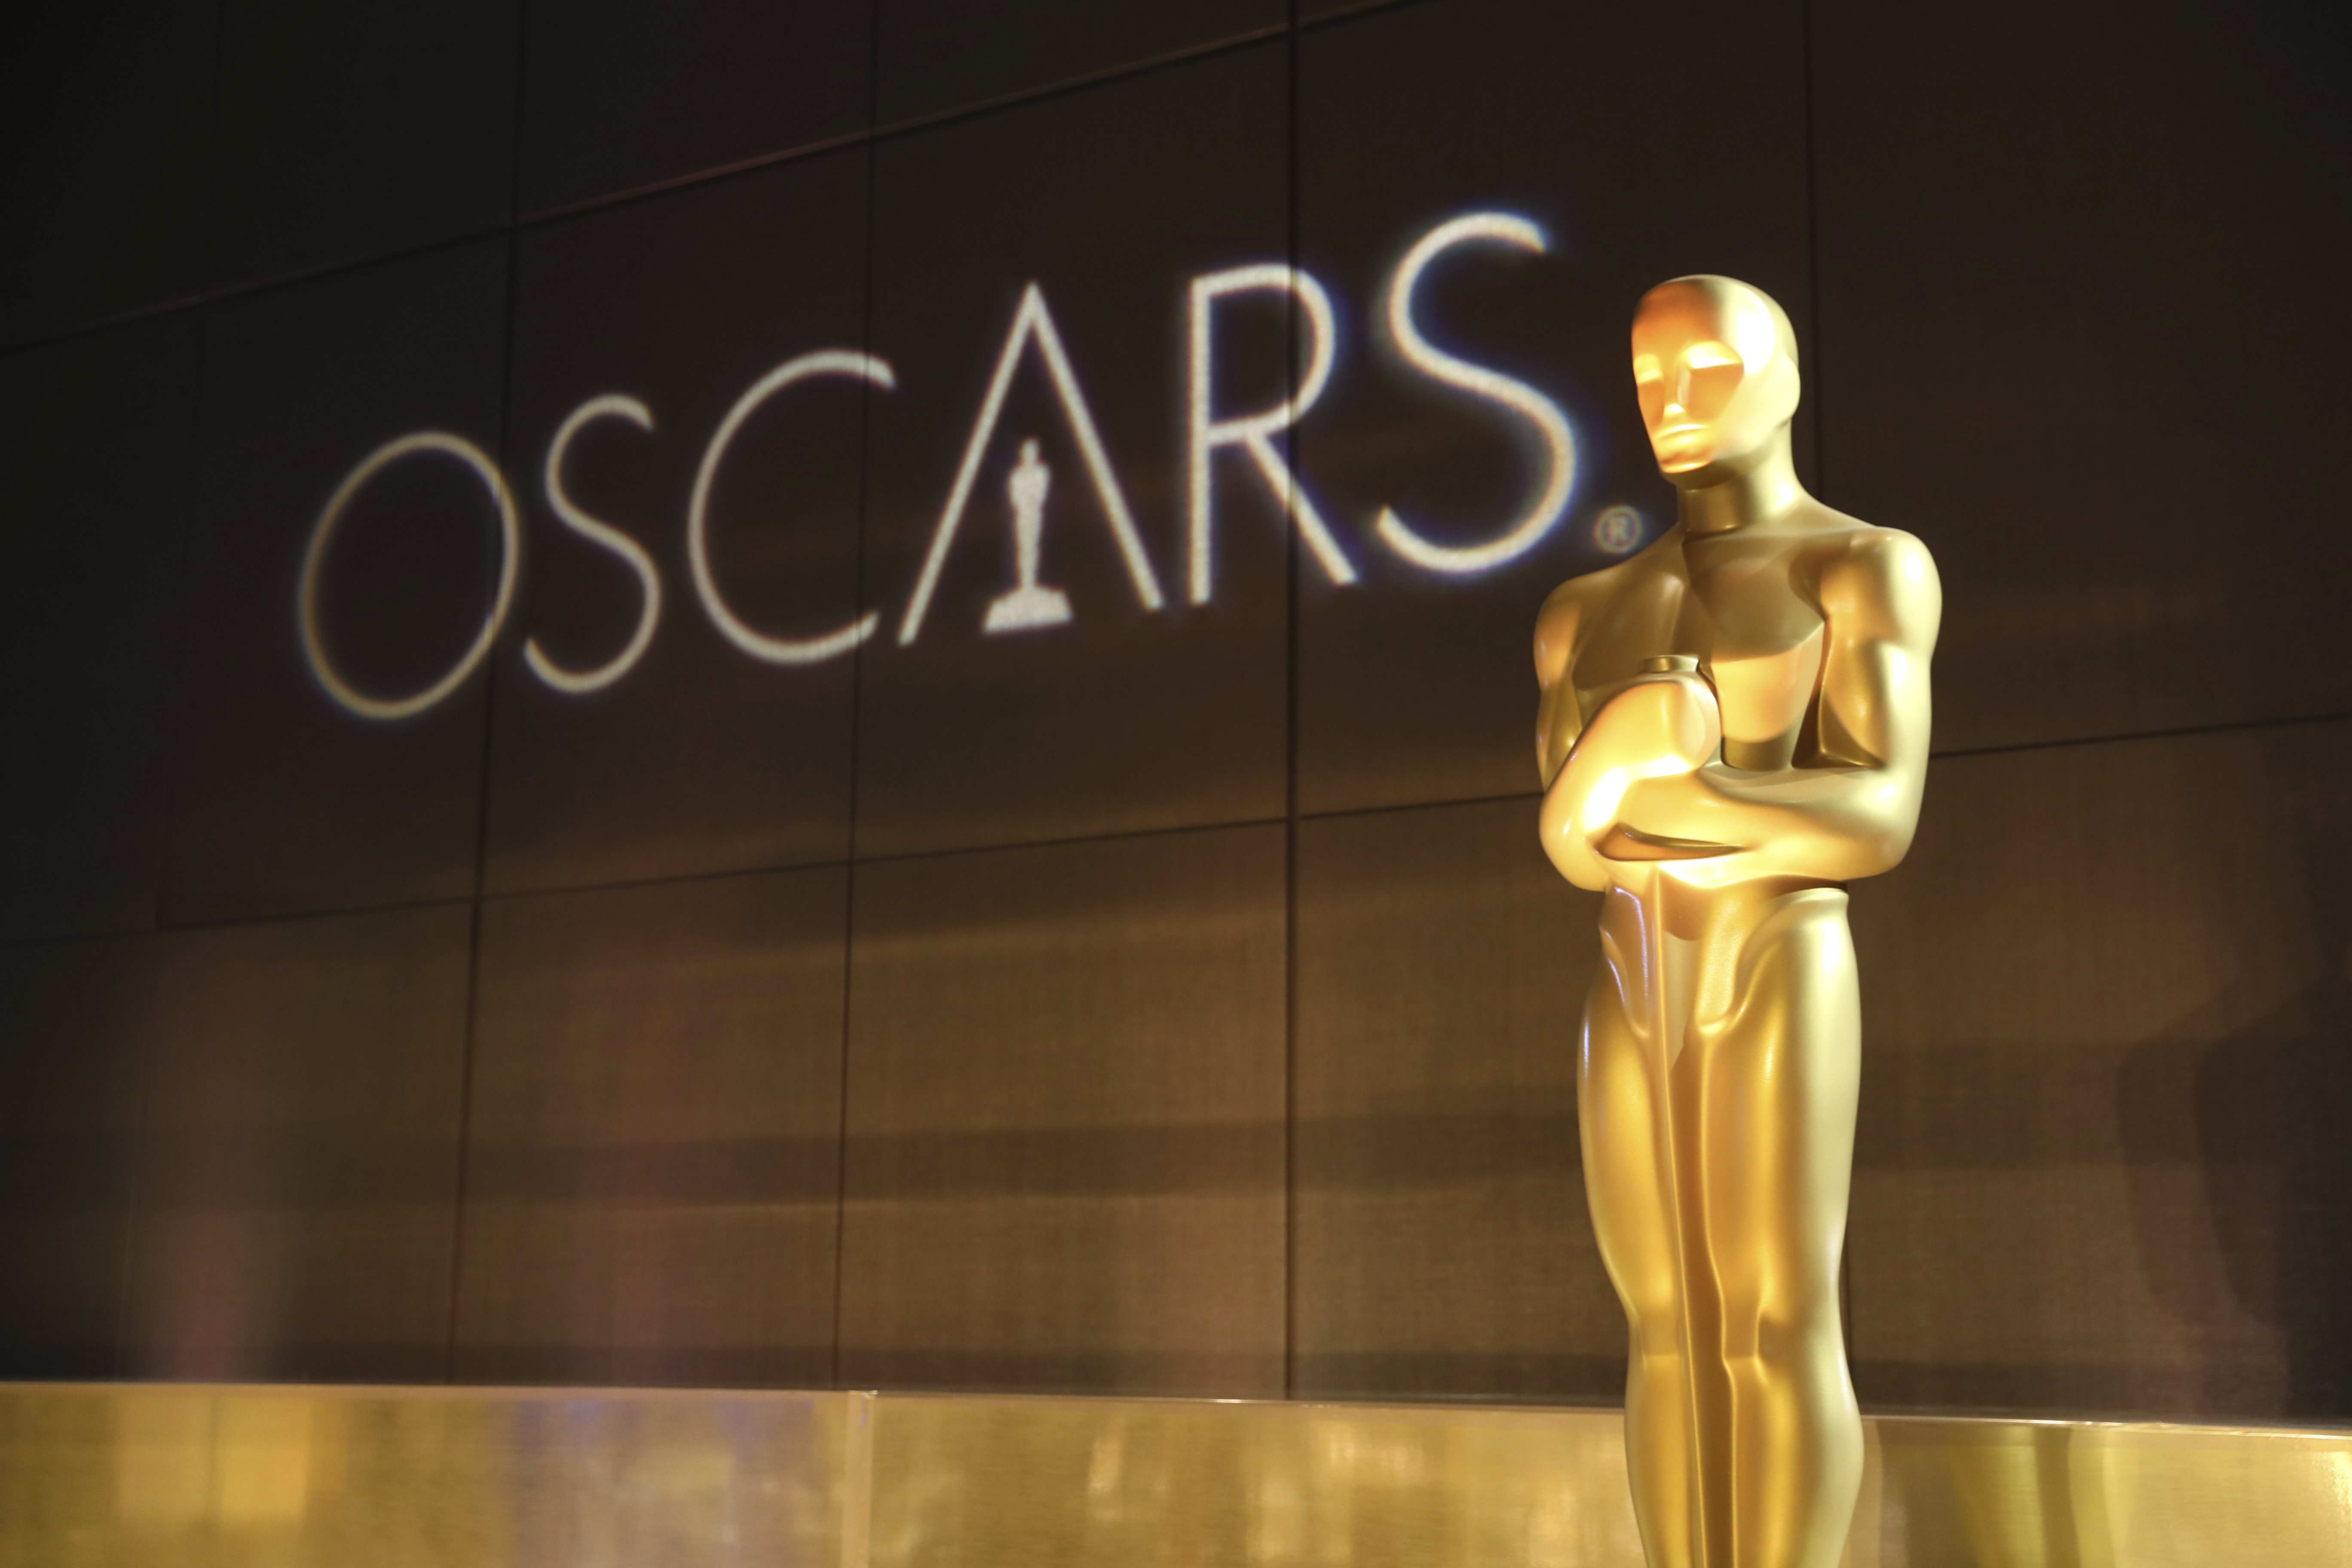 Oscars 2022 betting odds forex4you spread stone